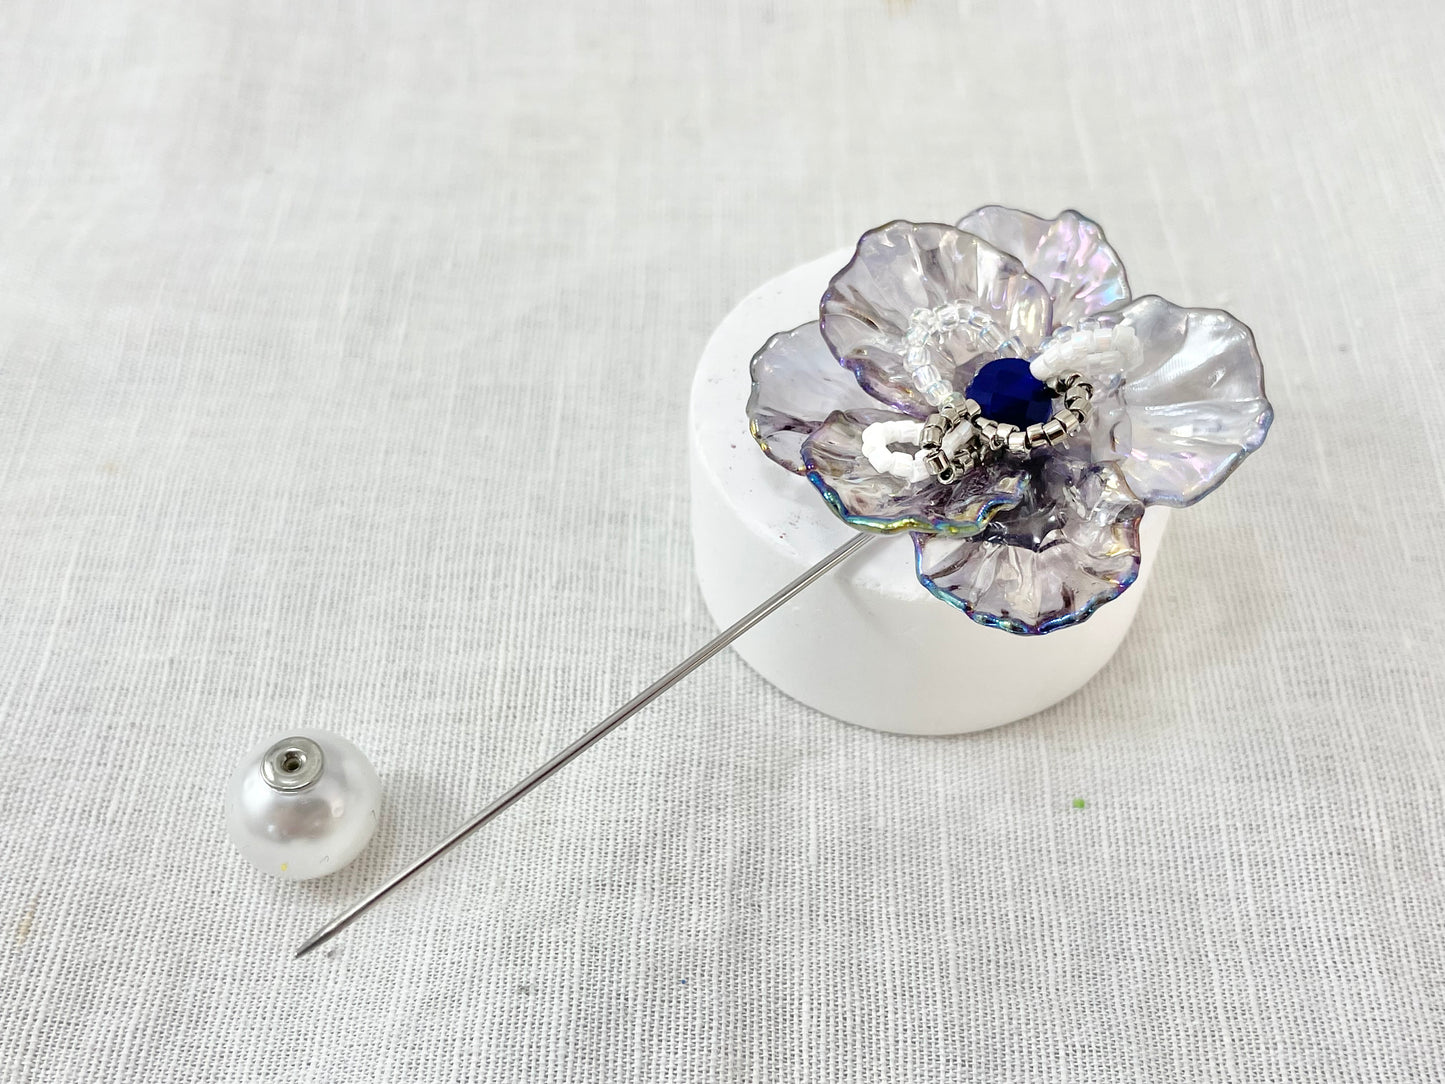 Pin brooch - flower - grey